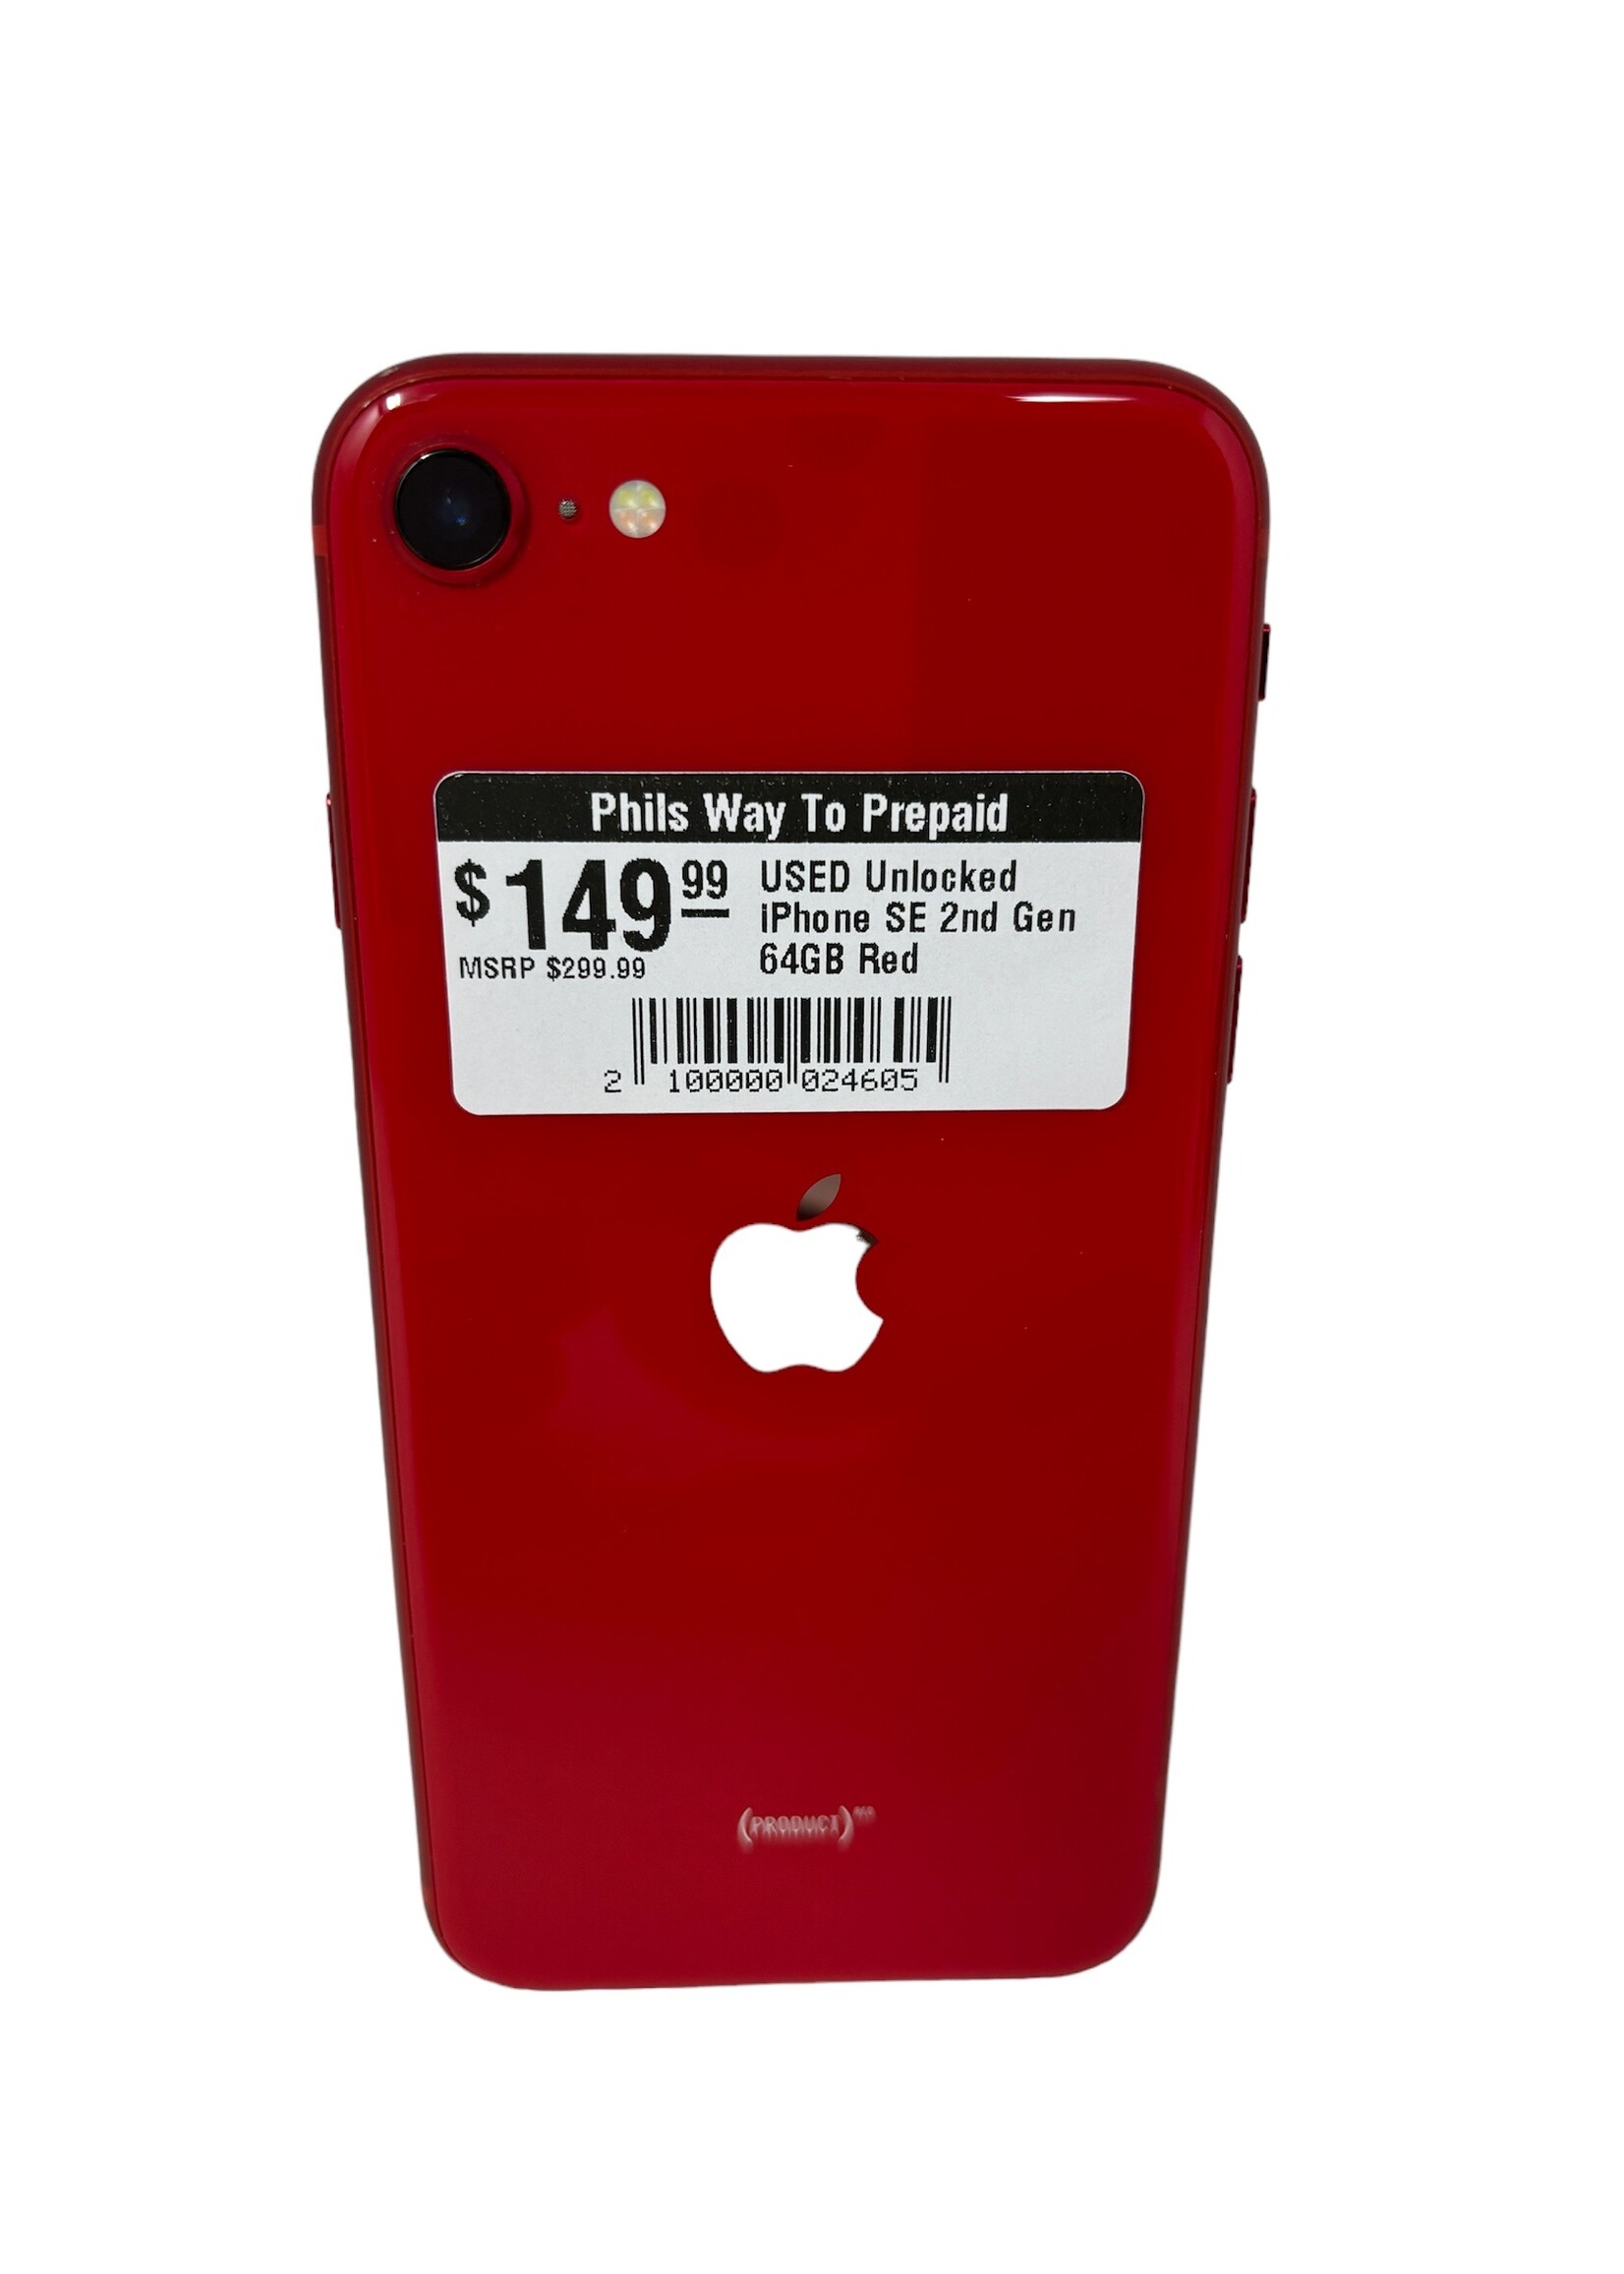 Apple USED Unlocked iPhone SE 2nd Gen 64GB Red